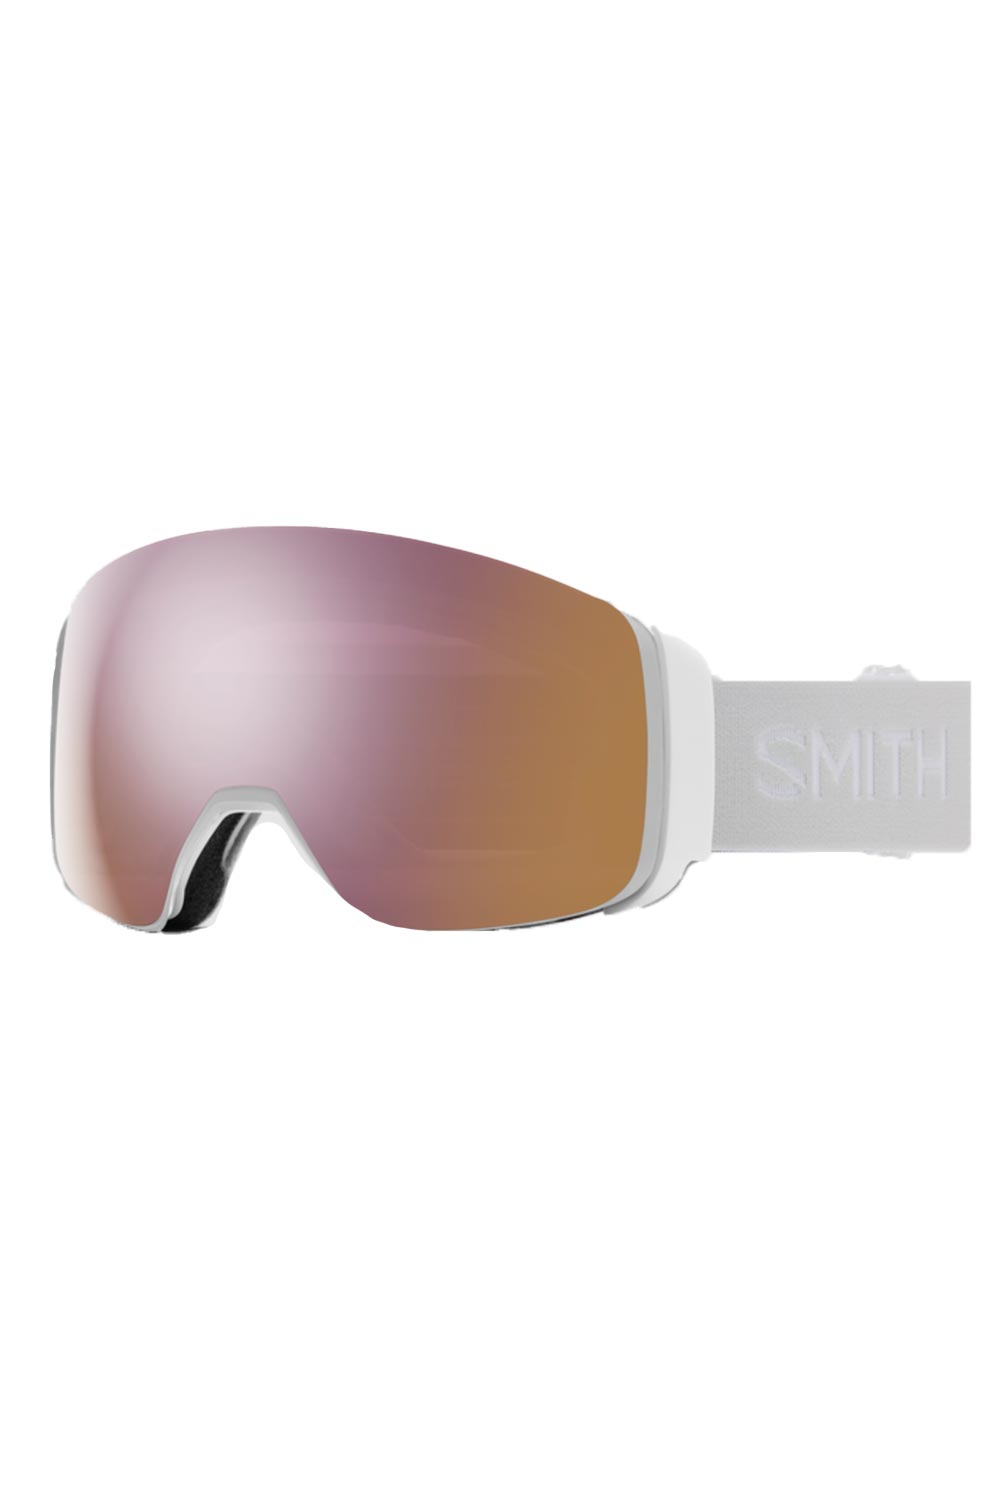 Smith 4D Mag ski goggles, white strap rose gold lens